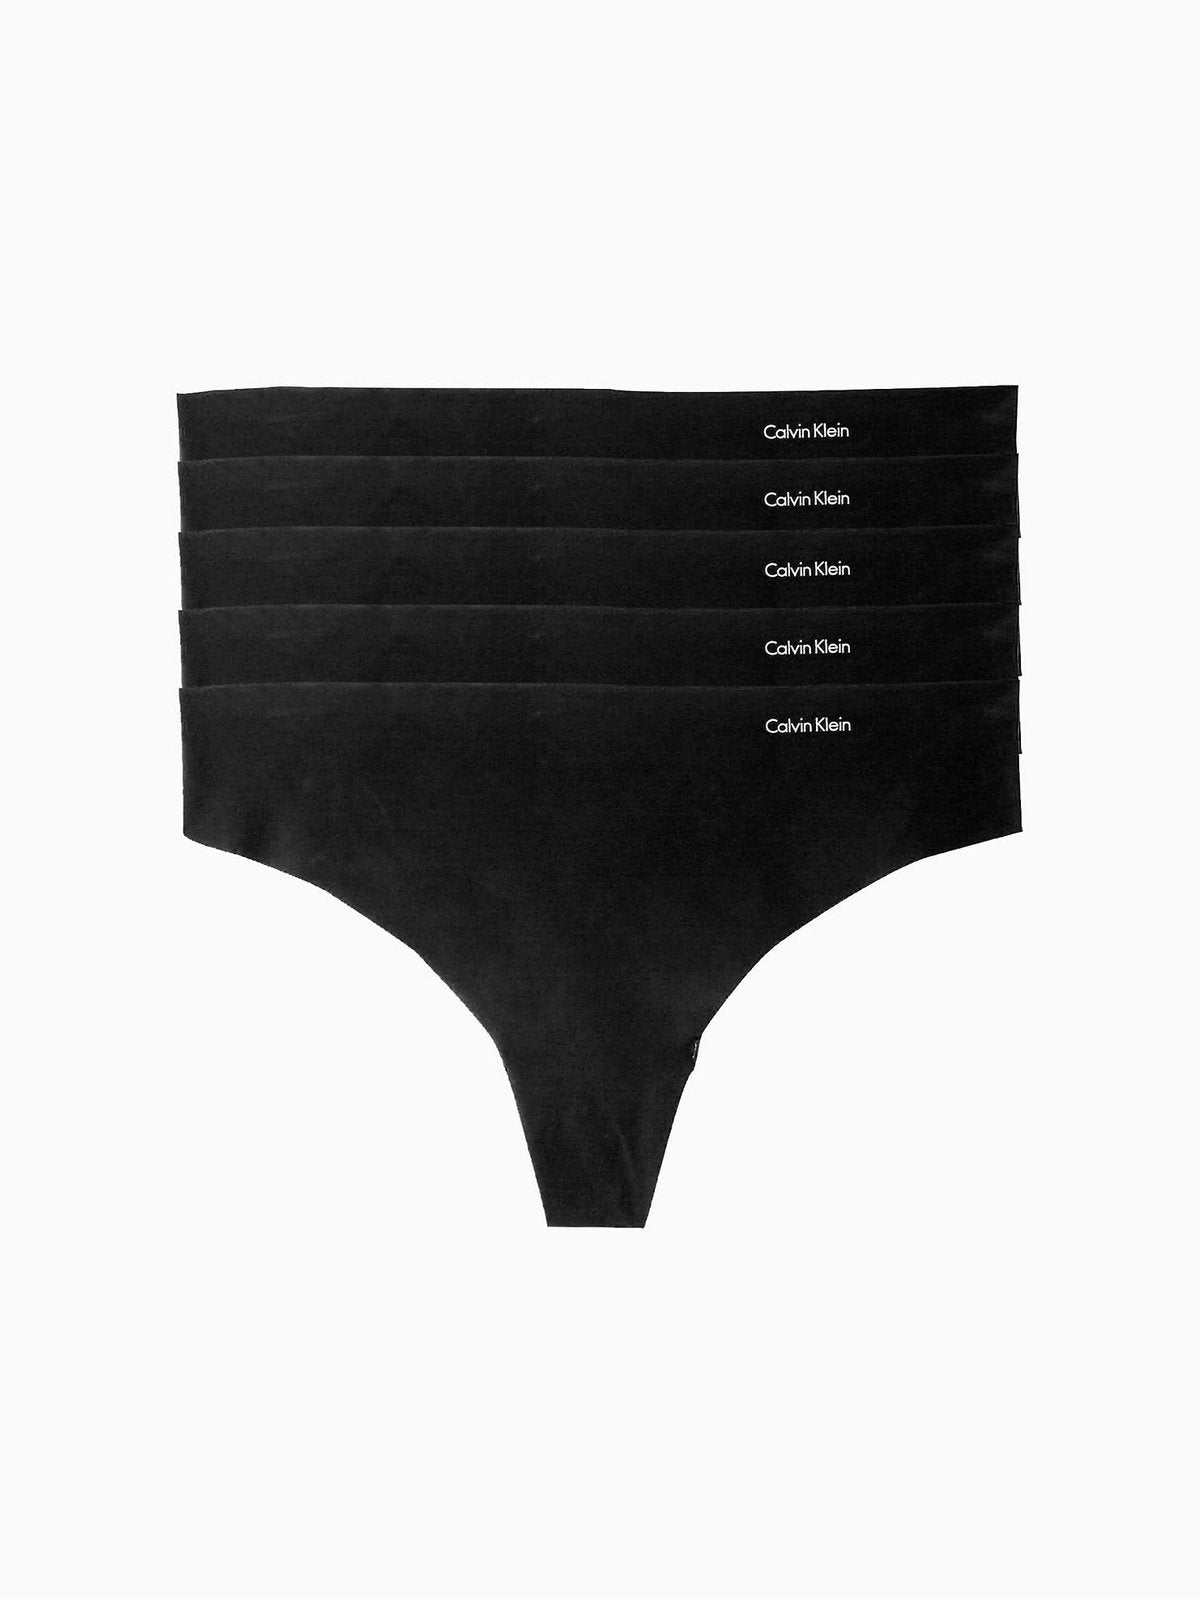 Calvin Klein Women's Invisibles 5 Pack Seamless Thong Black QD3556 001